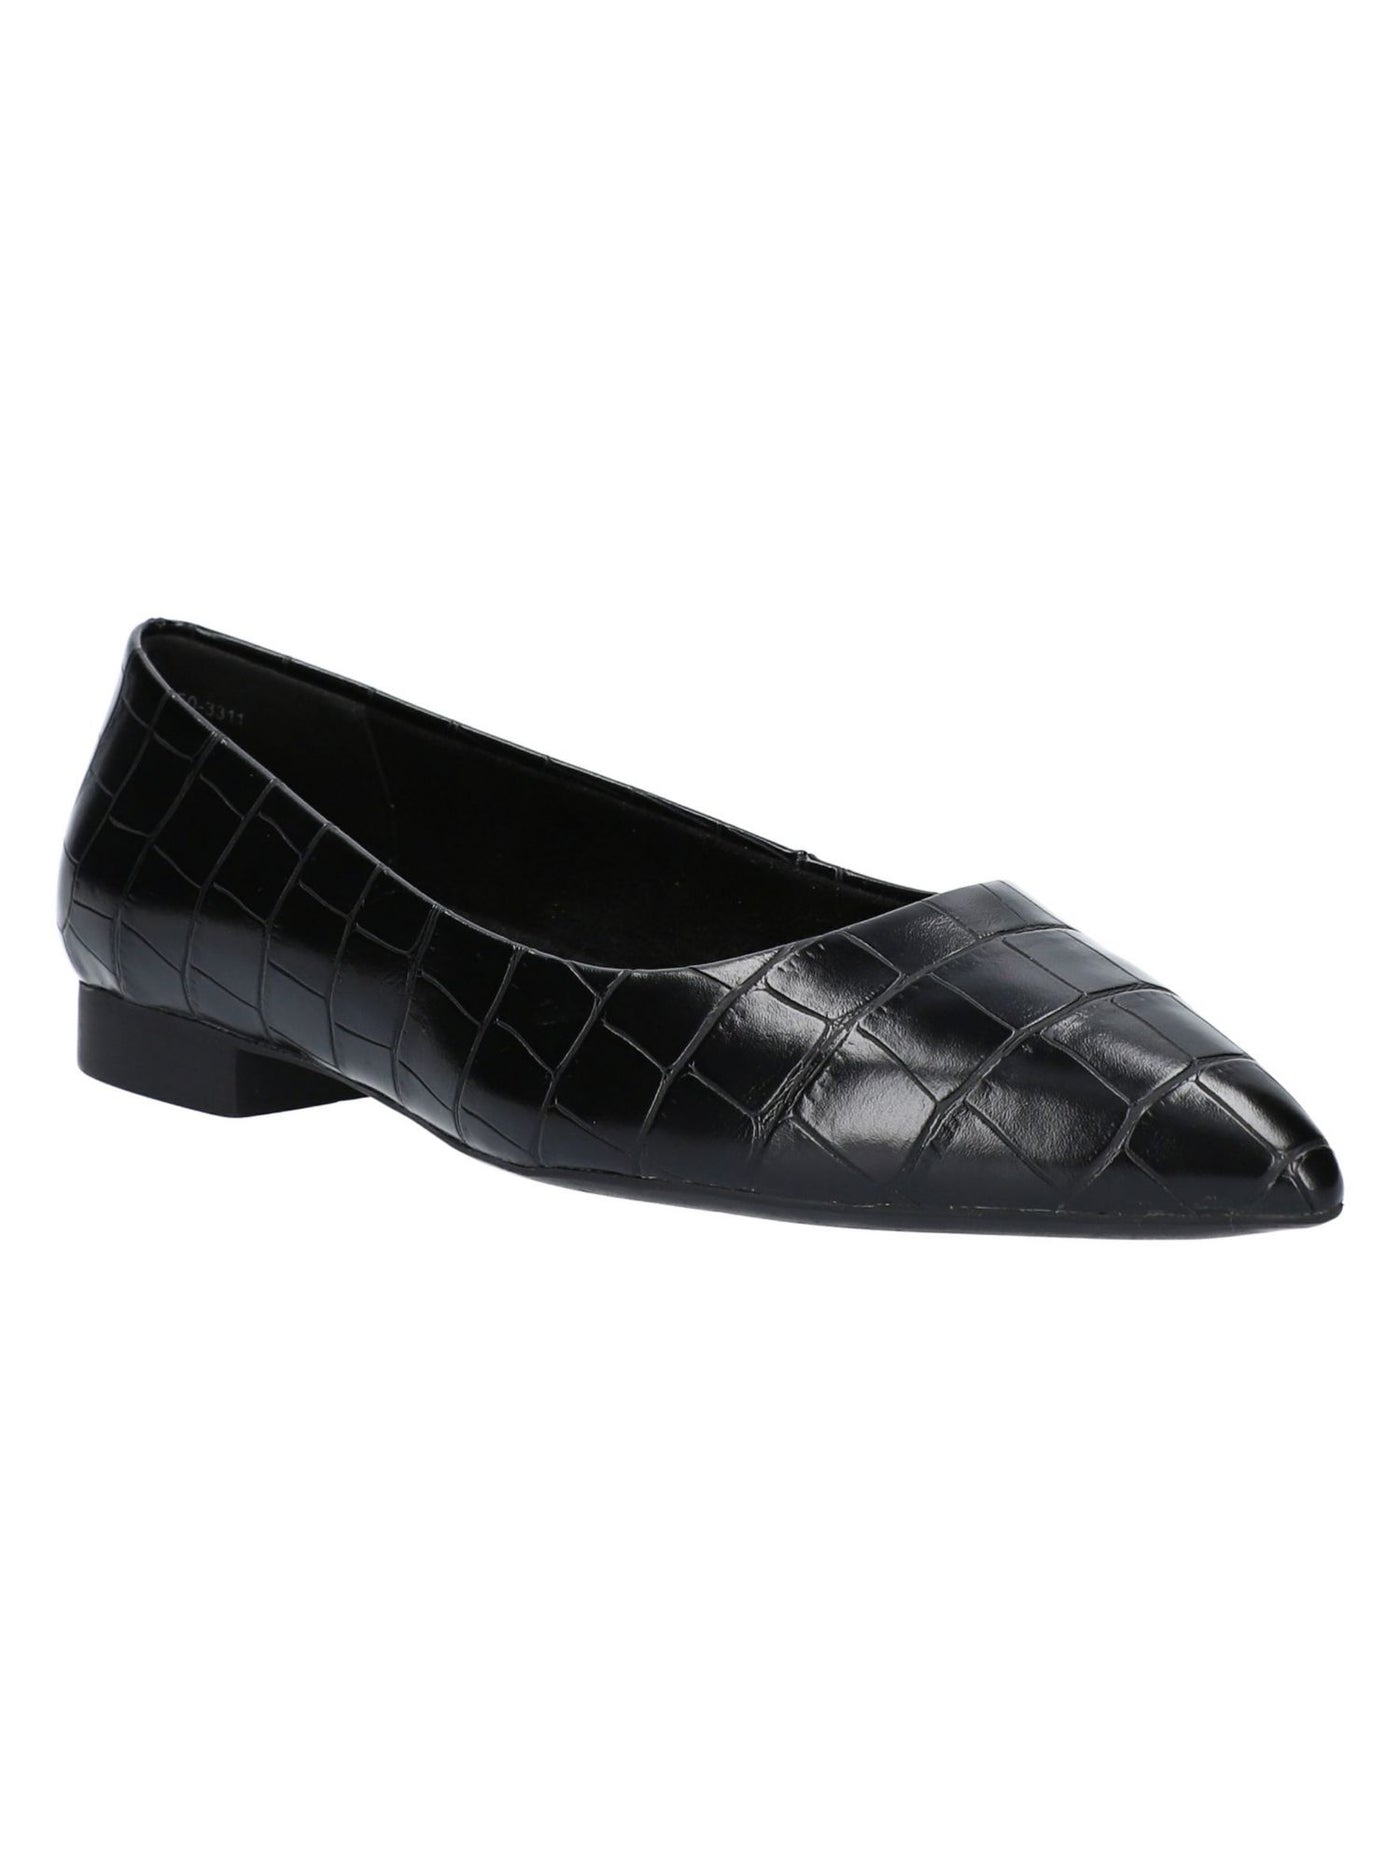 BELLA VITA Womens Black Padded Vivien Pointed Toe Slip On Dress Flats Shoes 9 N